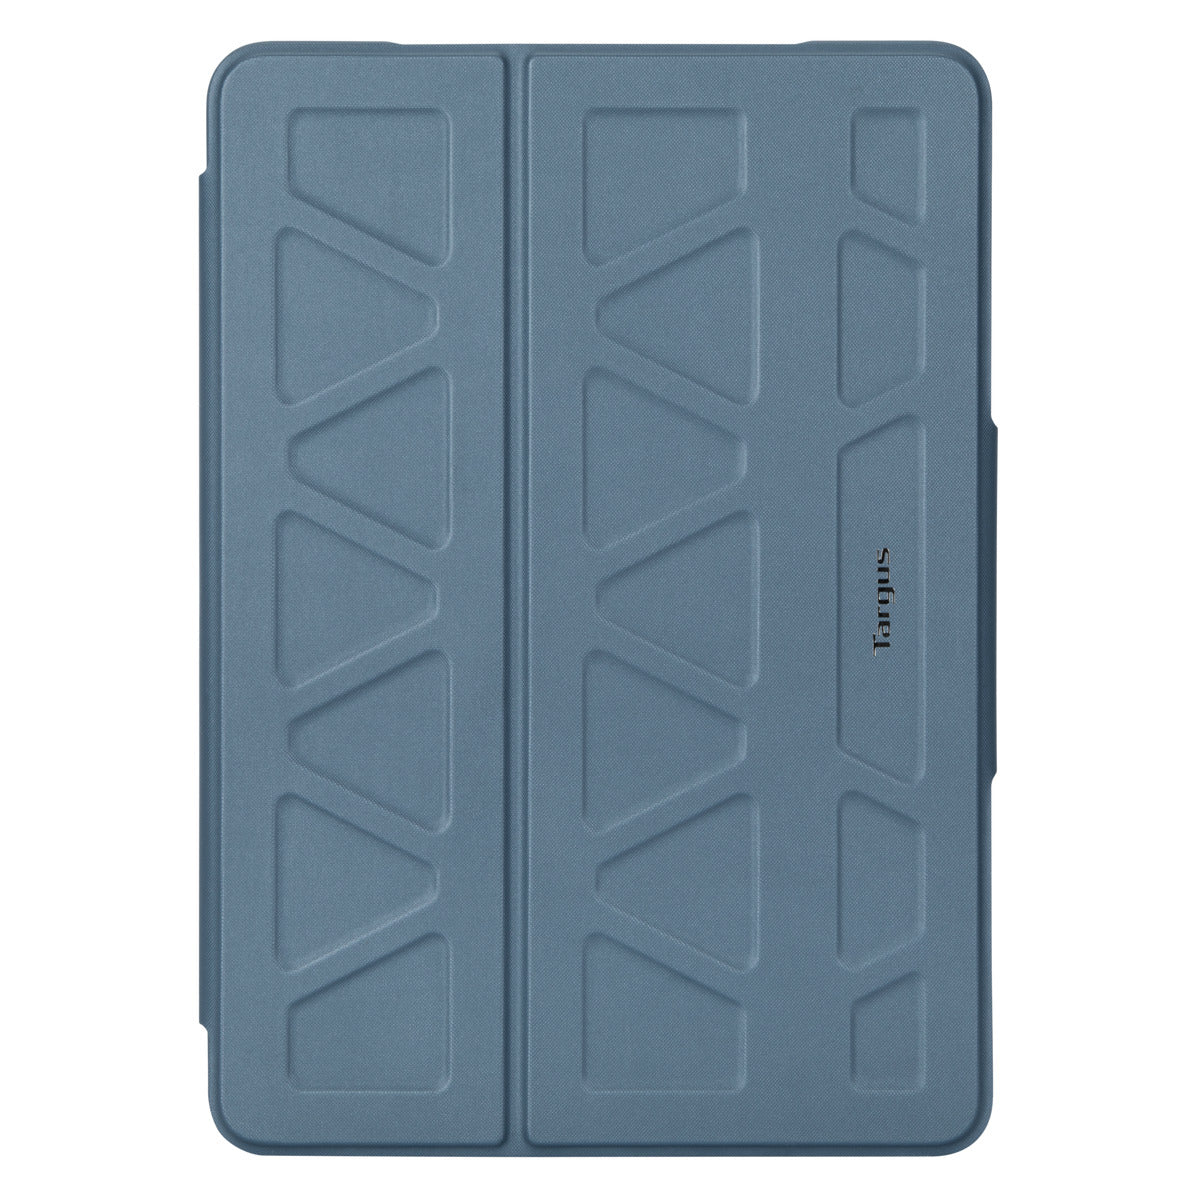 iPad Air 3 (10.5-inch) Cases & Accessories